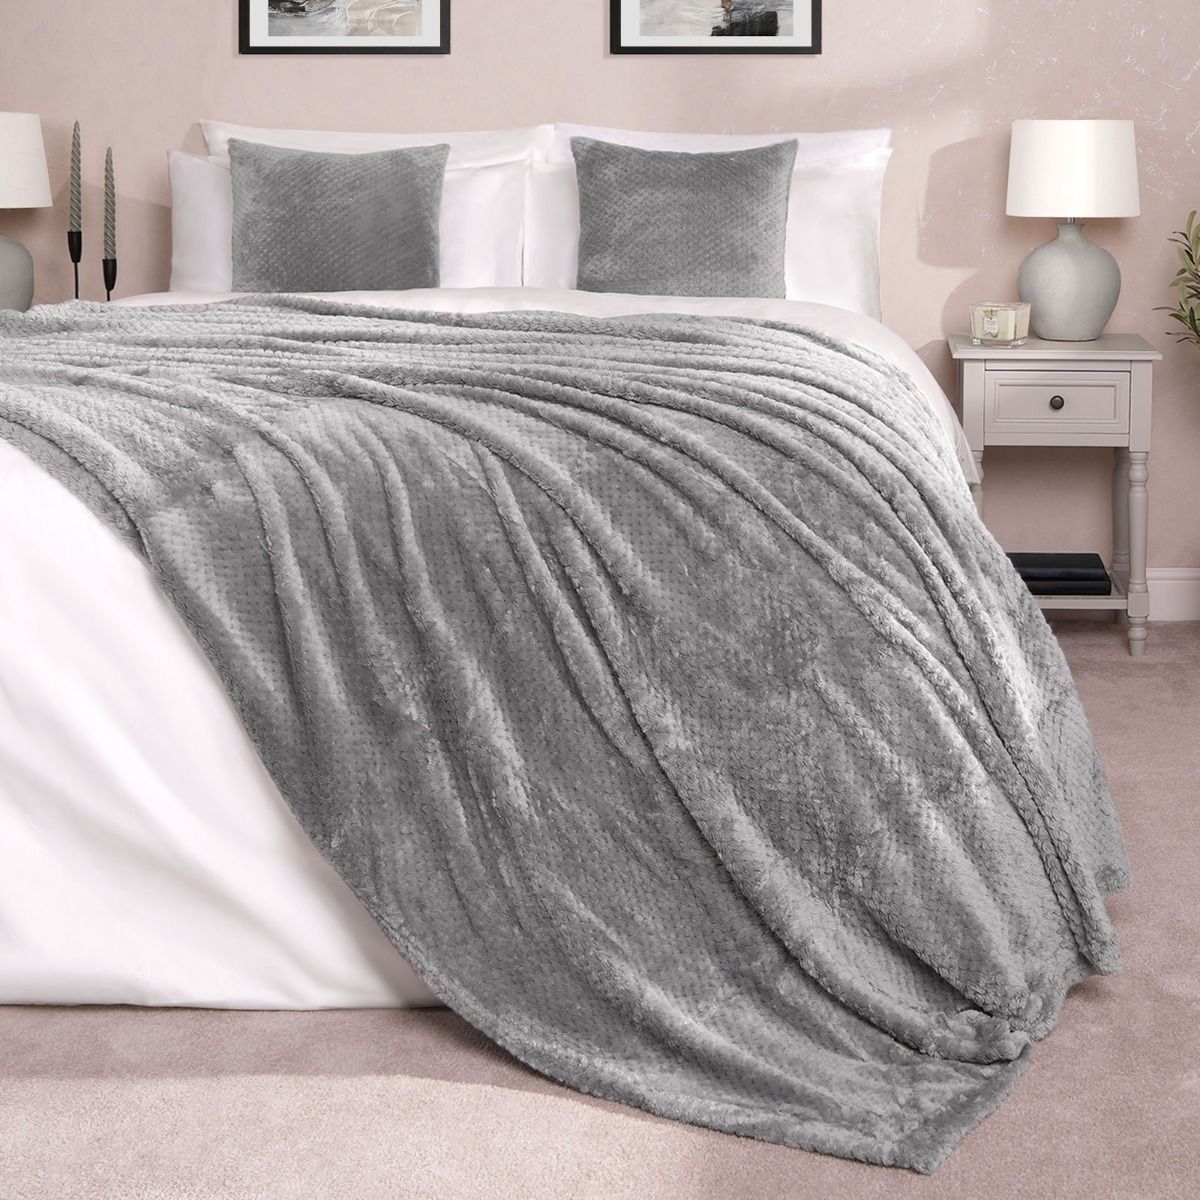 Luxury Waffle Mink Warm Throw Over Sofa Bed Soft Blanket 150 x 200cm Charcoal